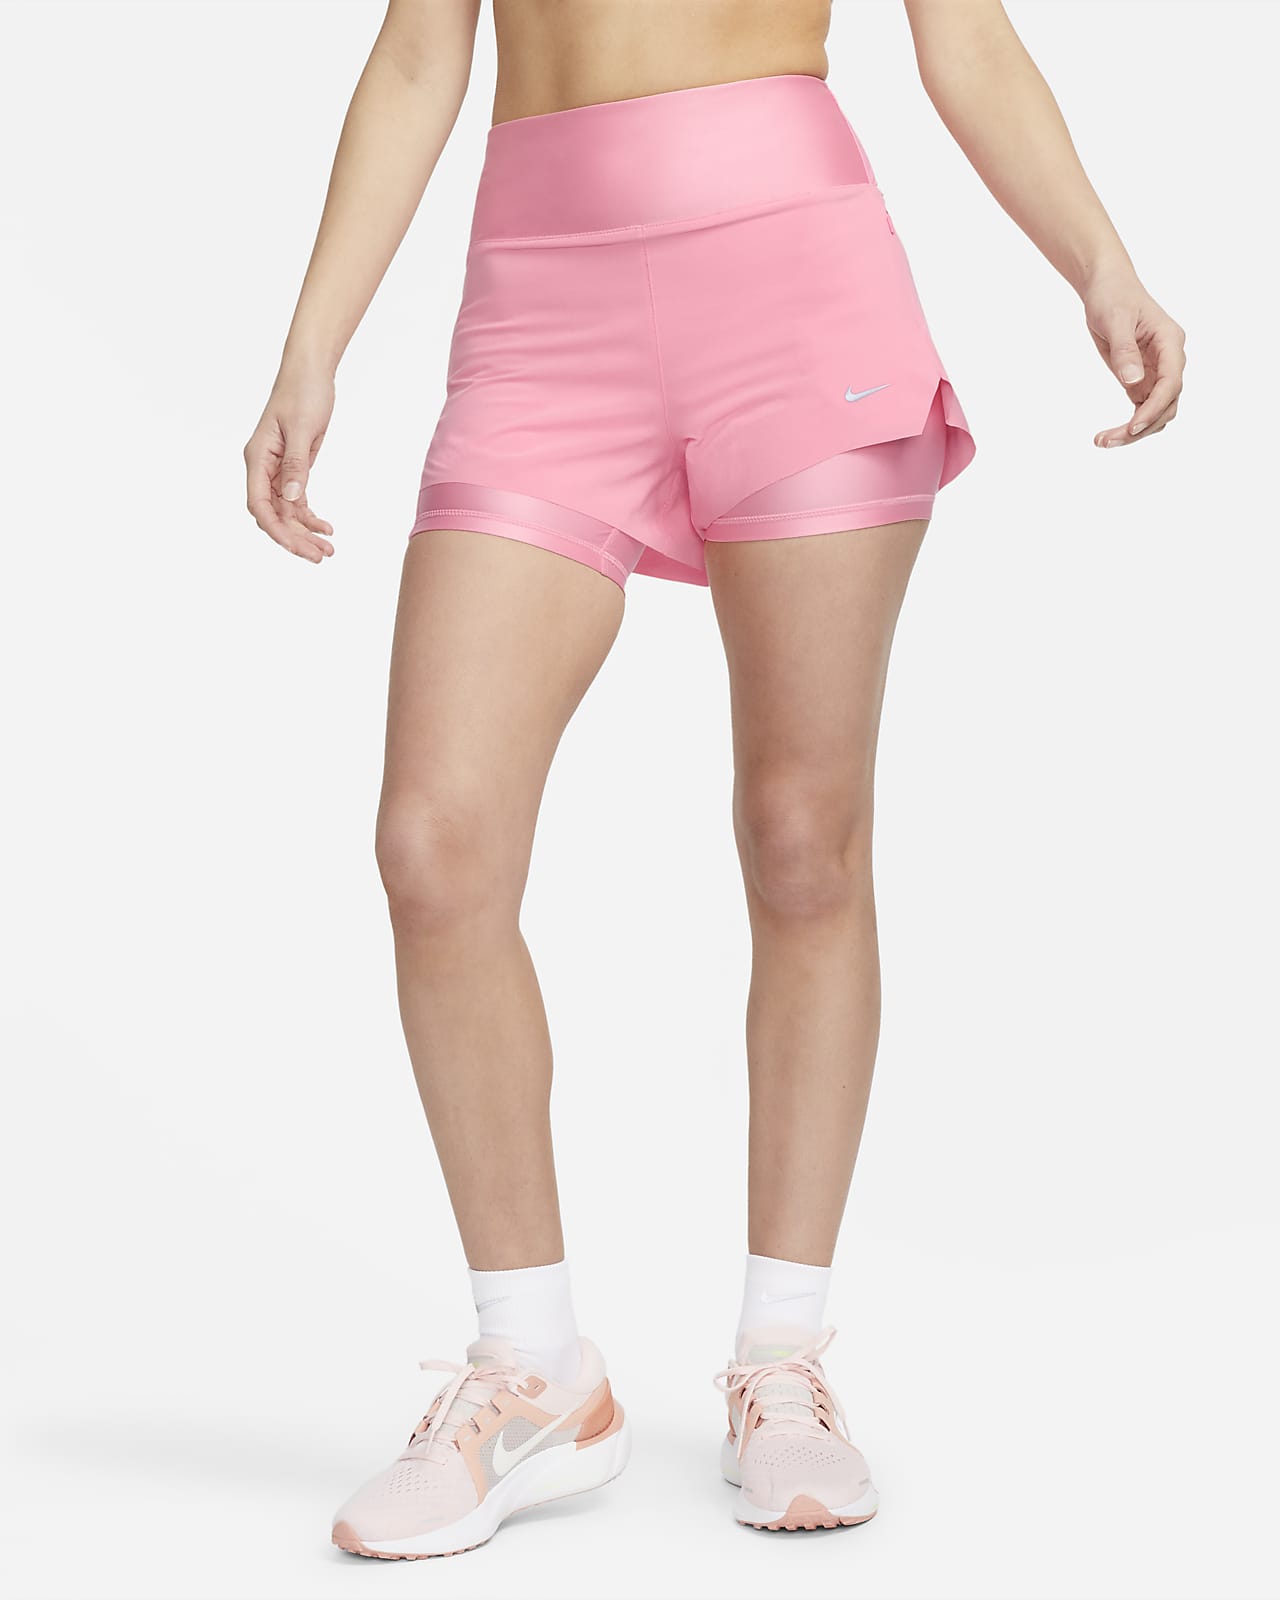 Nike Dri-FIT Swift Normal Belli 8 cm 2'si 1 Arada Cepli Kadın Koşu Şortu